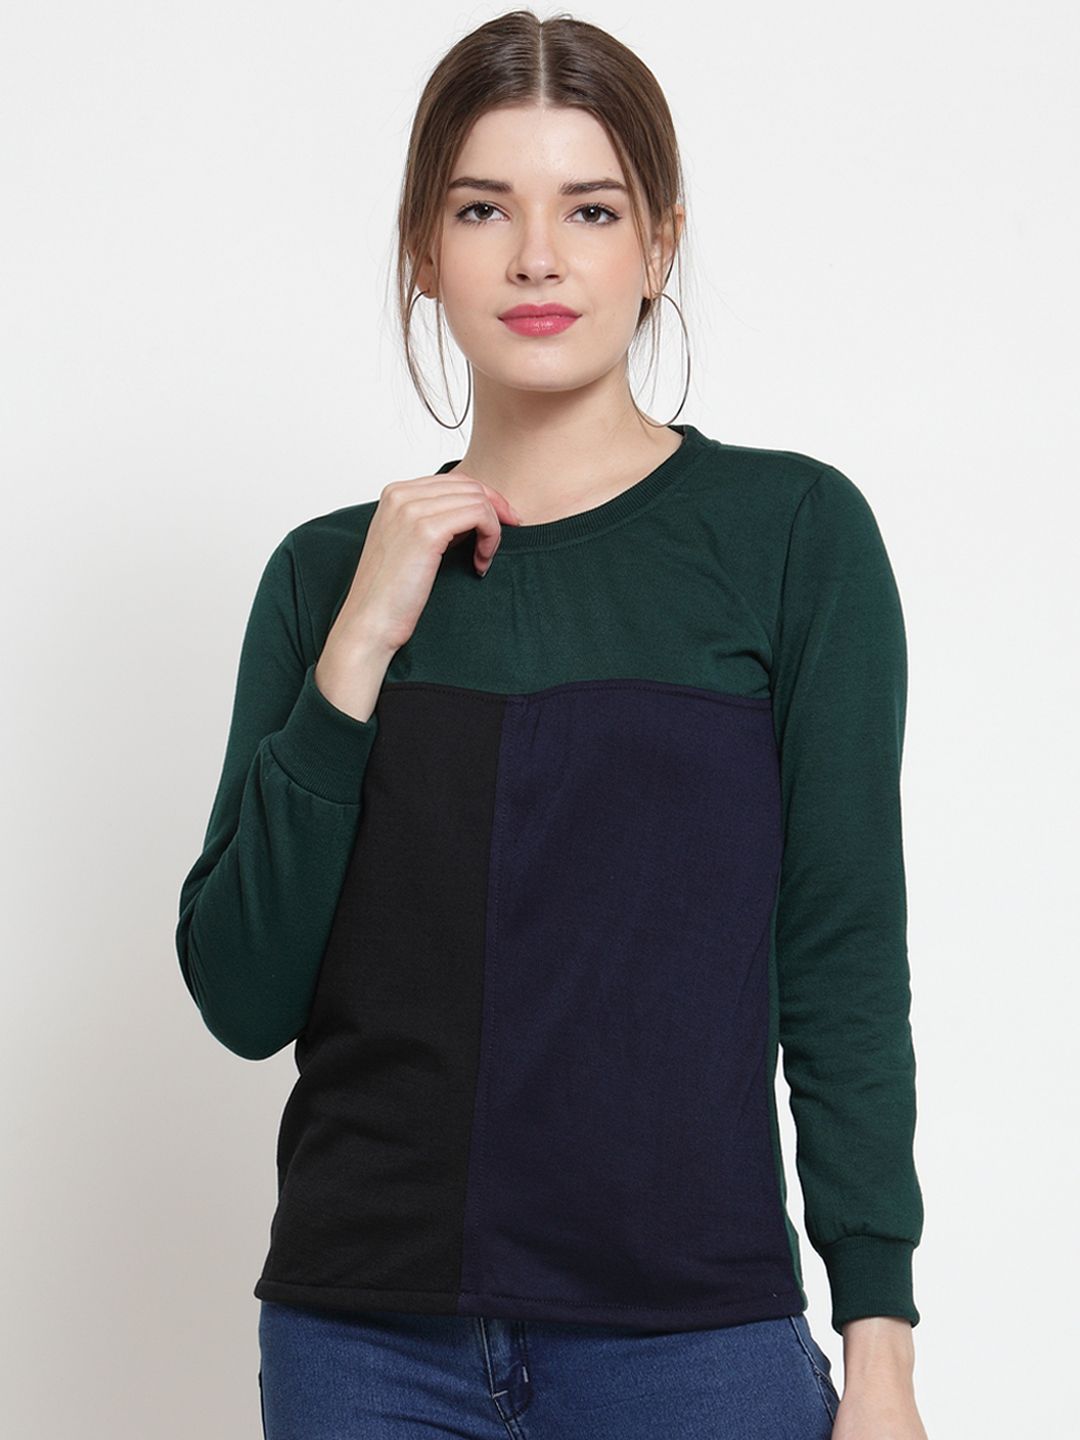 Belle Fille Women Green Colourblocked Sweatshirt Price in India